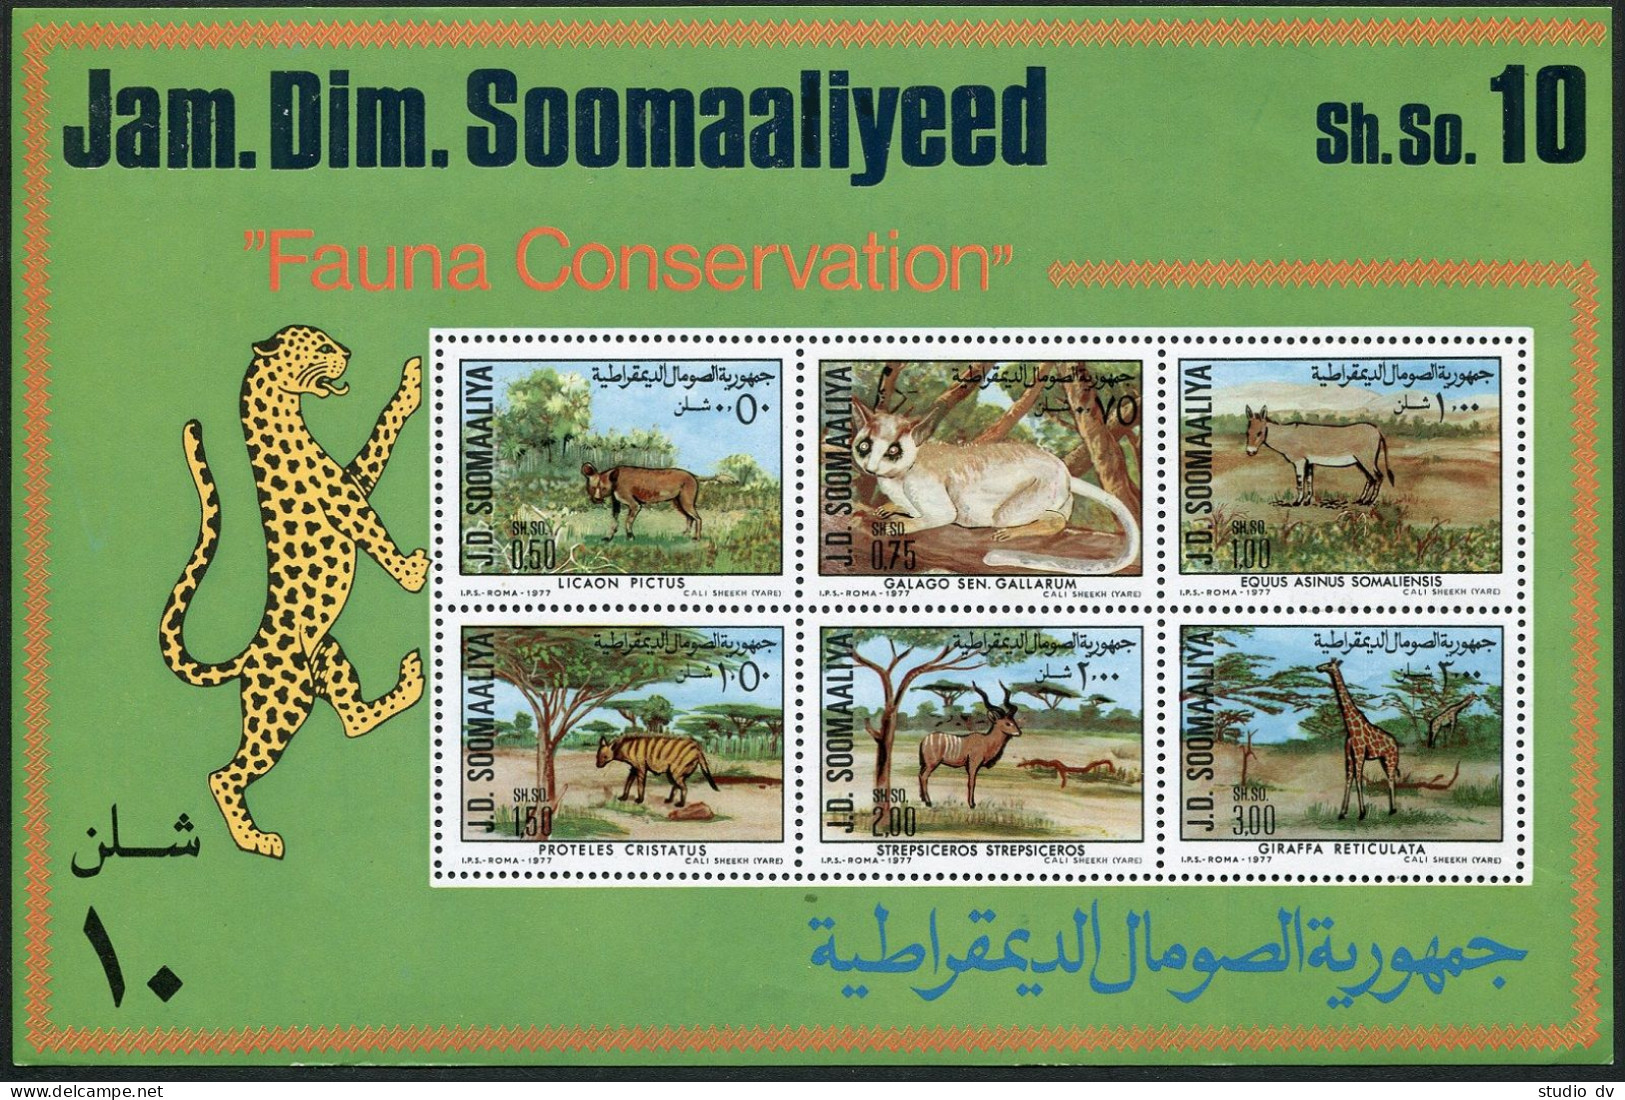 Somalia 444-449,449a,MNH. Protected Animals 1977:Bush Baby,Giraffe,Somali Ass, - Somalie (1960-...)